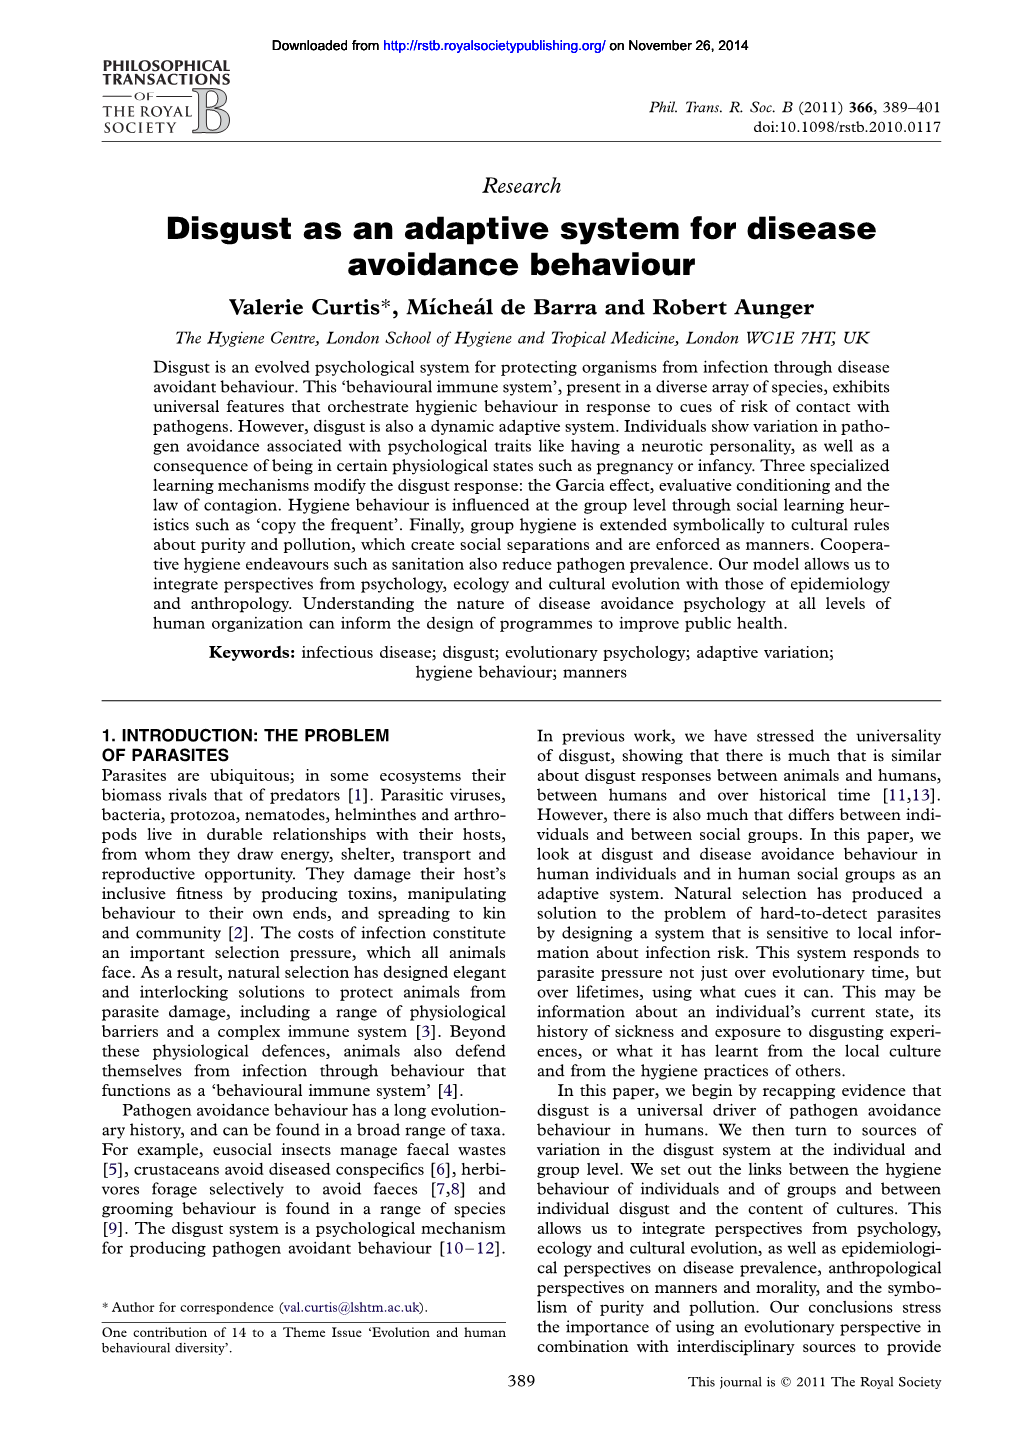 Disgust As an Adaptive System for Disease Avoidance Behaviour